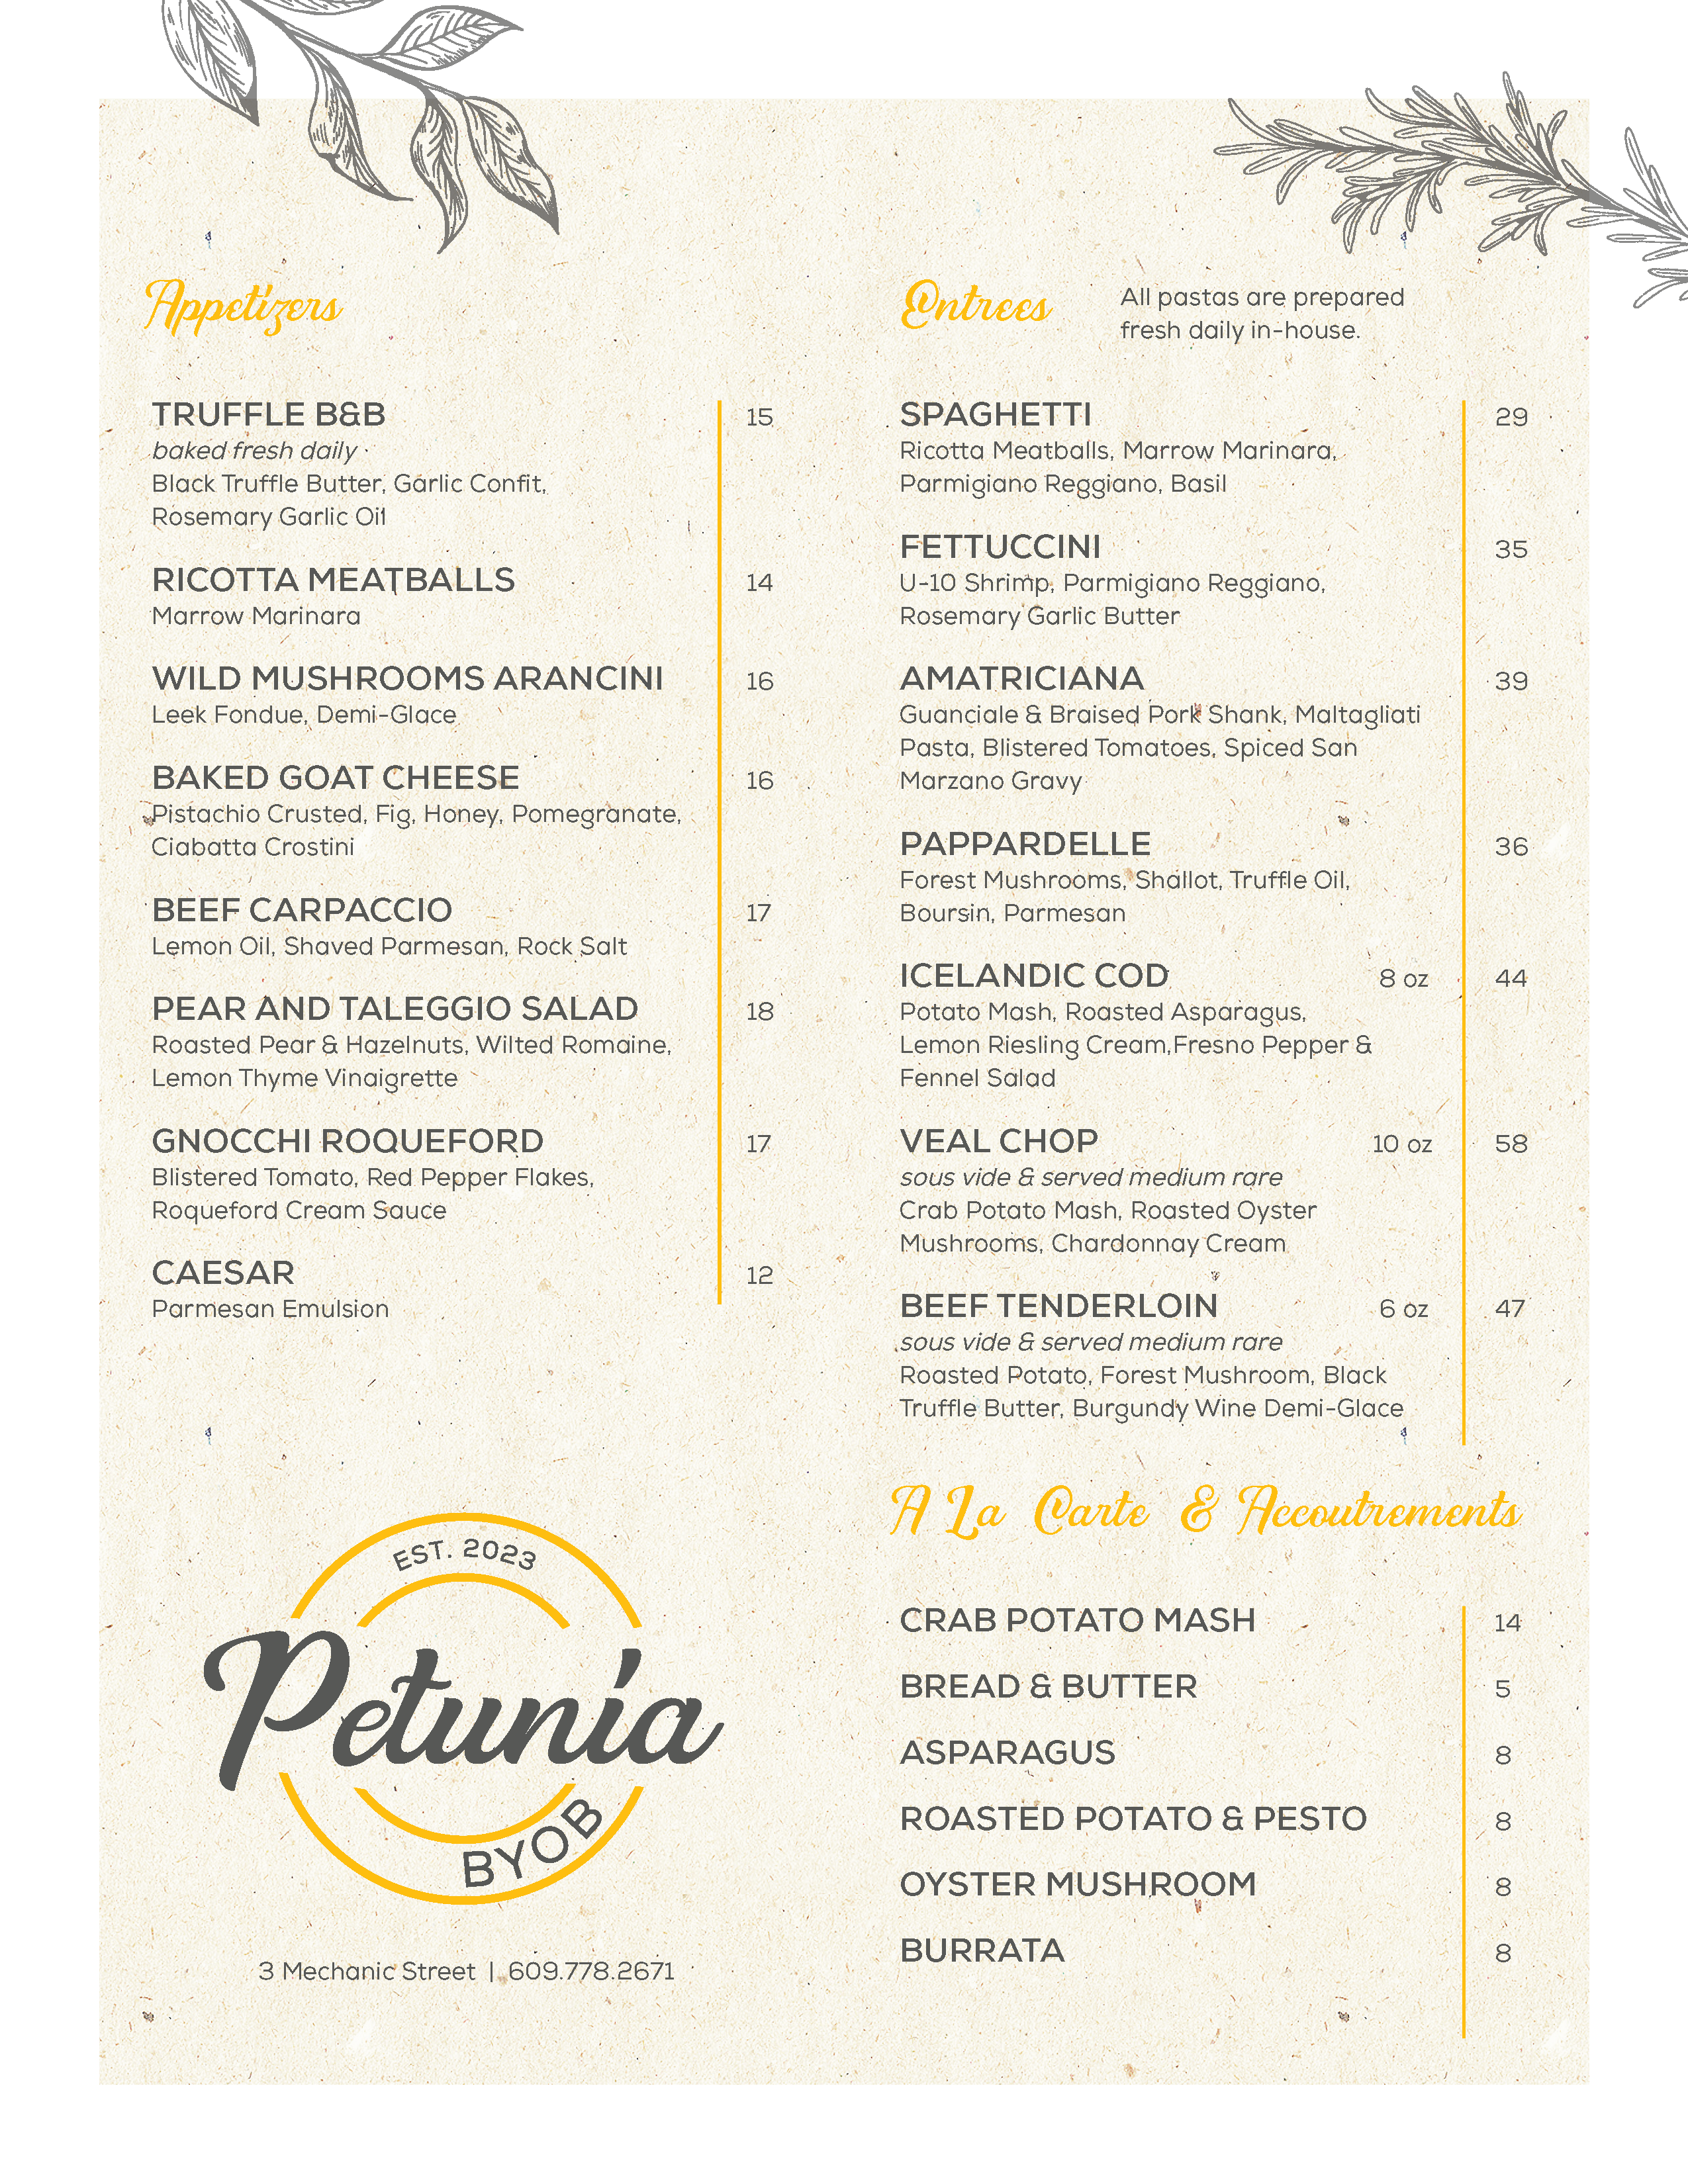 Petunia BYOB Fall Dinner Menu. Italian Restaurant in Cape May Court House, New Jersey.